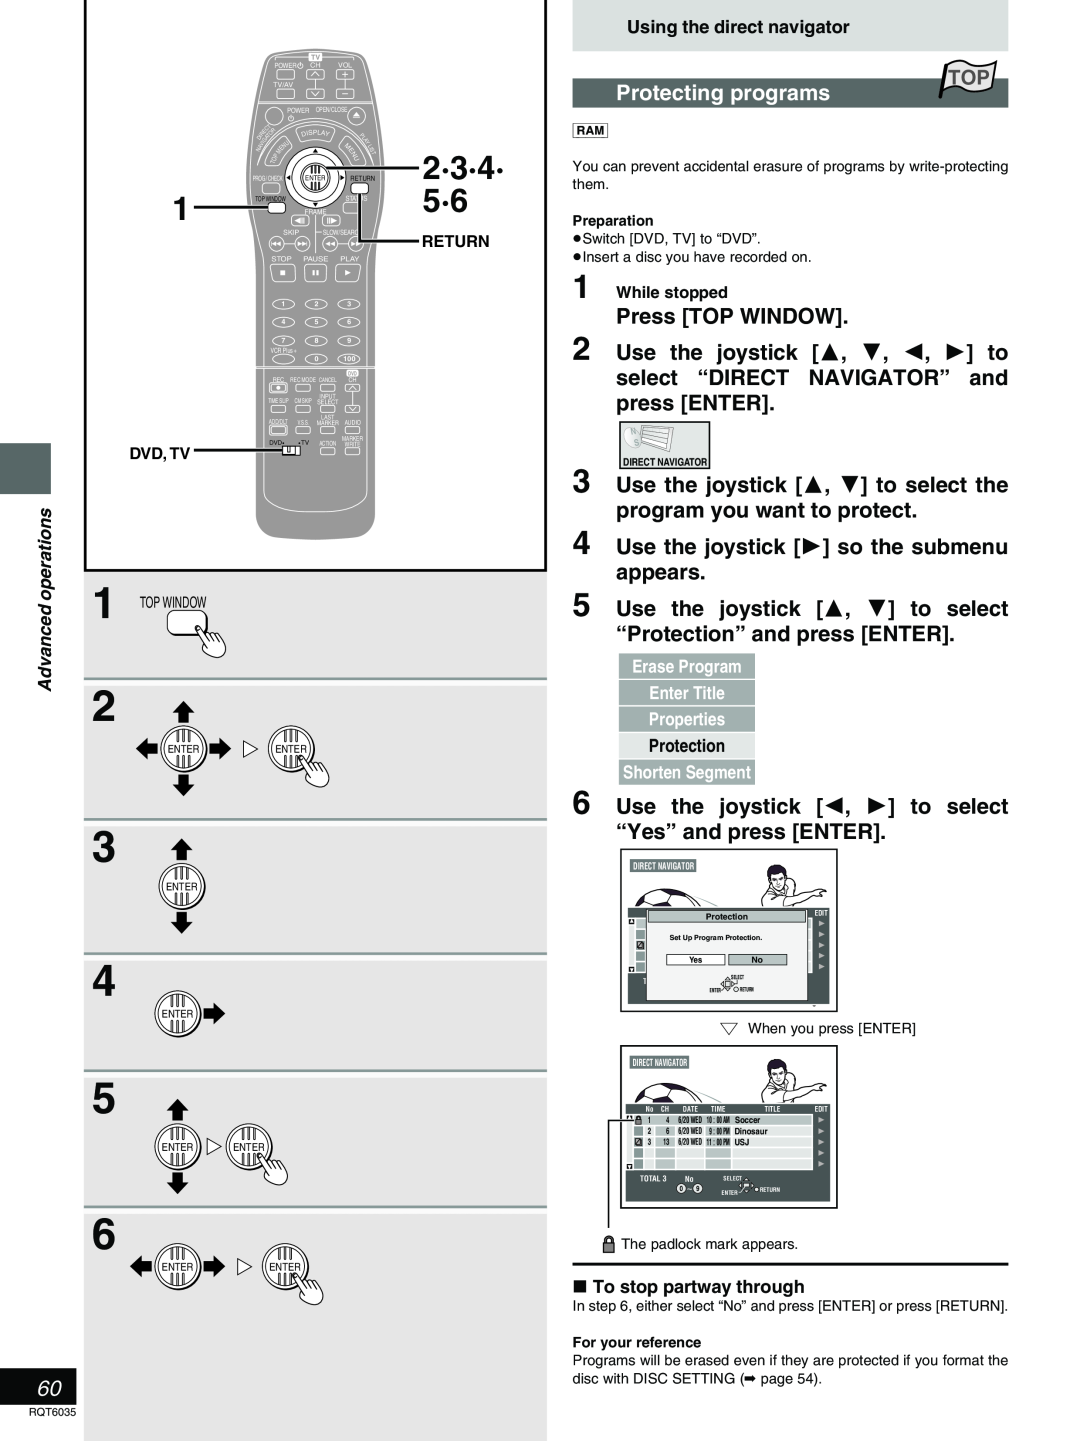 Panasonic DMR-E20 2·3·4· 5·6, Protecting programs, Press TOP WINDOW, Use the joystick 3, 4, 2, 1 to, press ENTER, Dvd, Tv 